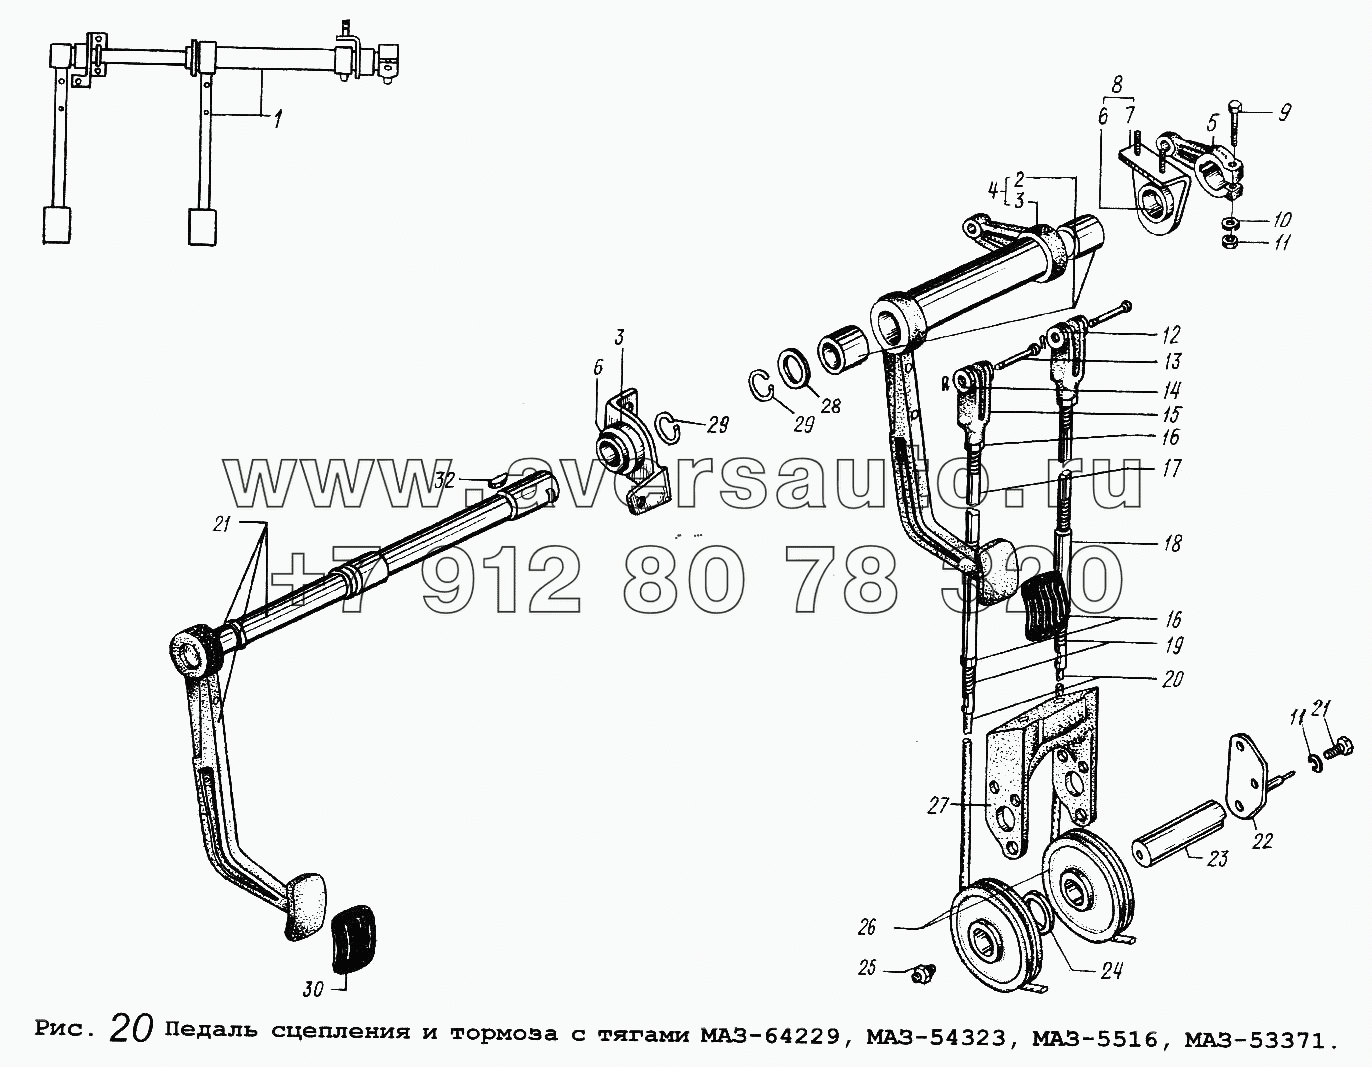 Педаль сцепления и тормоза с тягами МАЗ-64229, МАЗ-54323, МАЗ-5516, МАЗ-53371